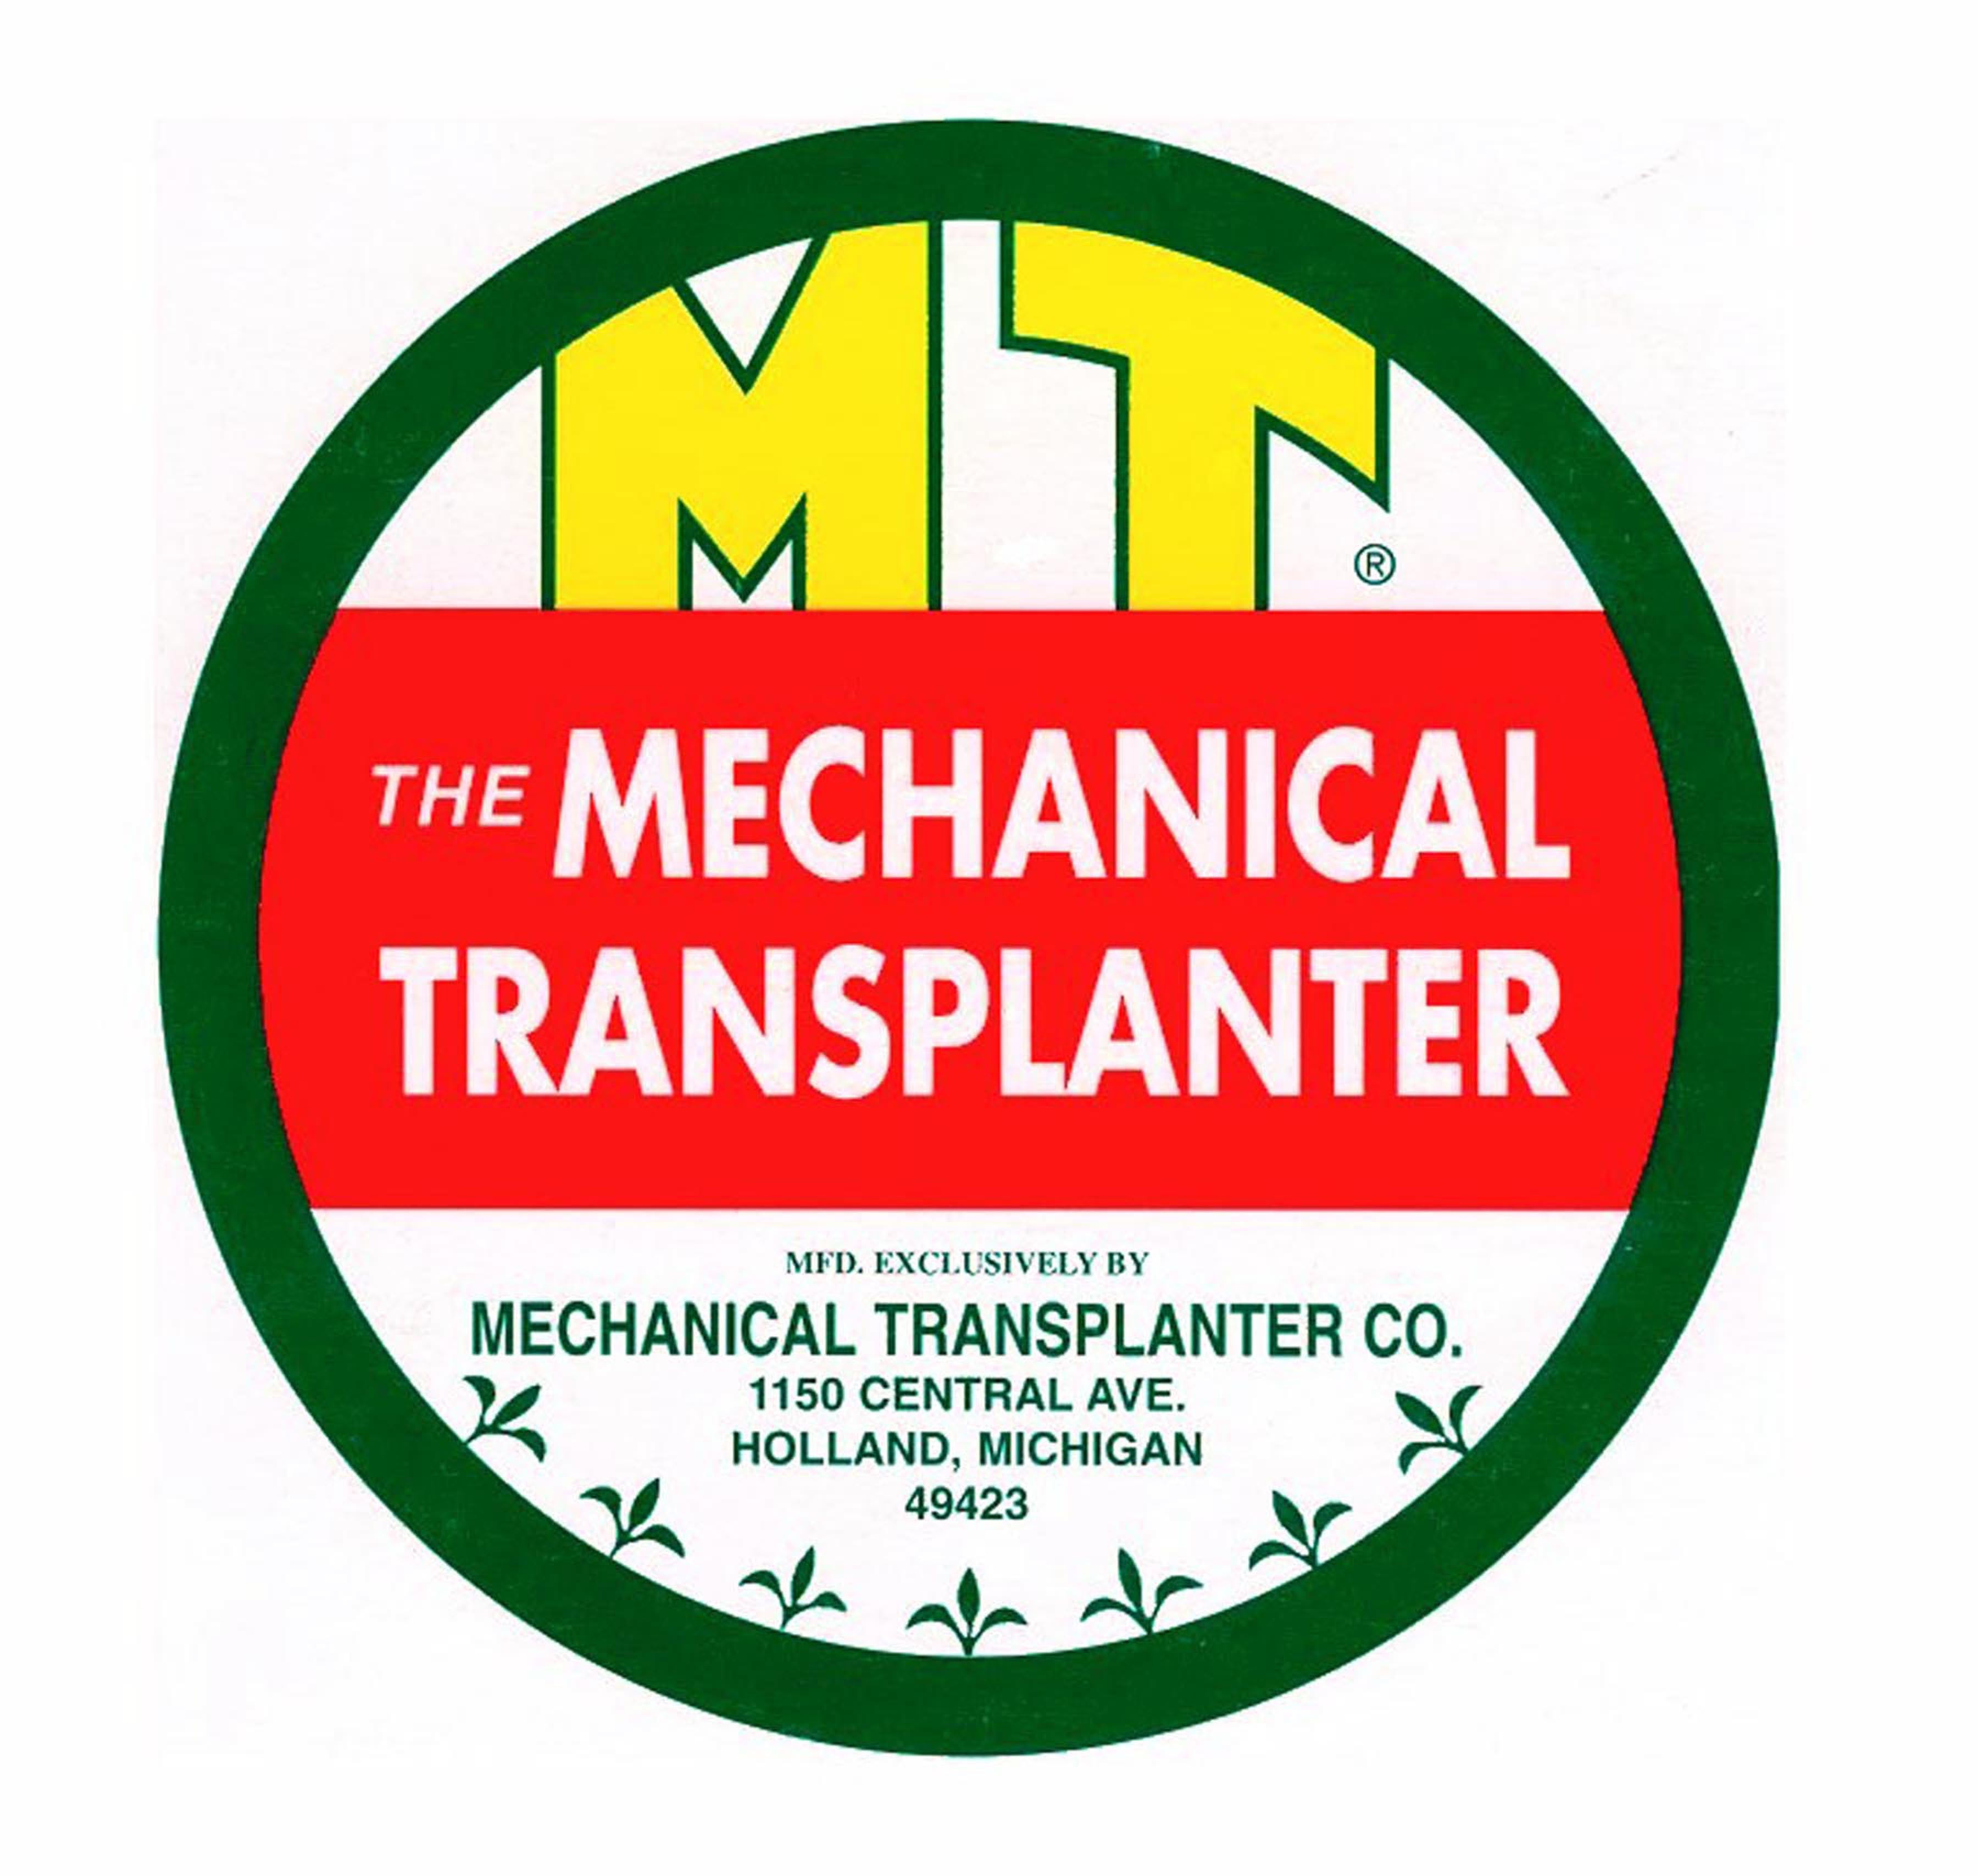 Mechanical Transplanter company